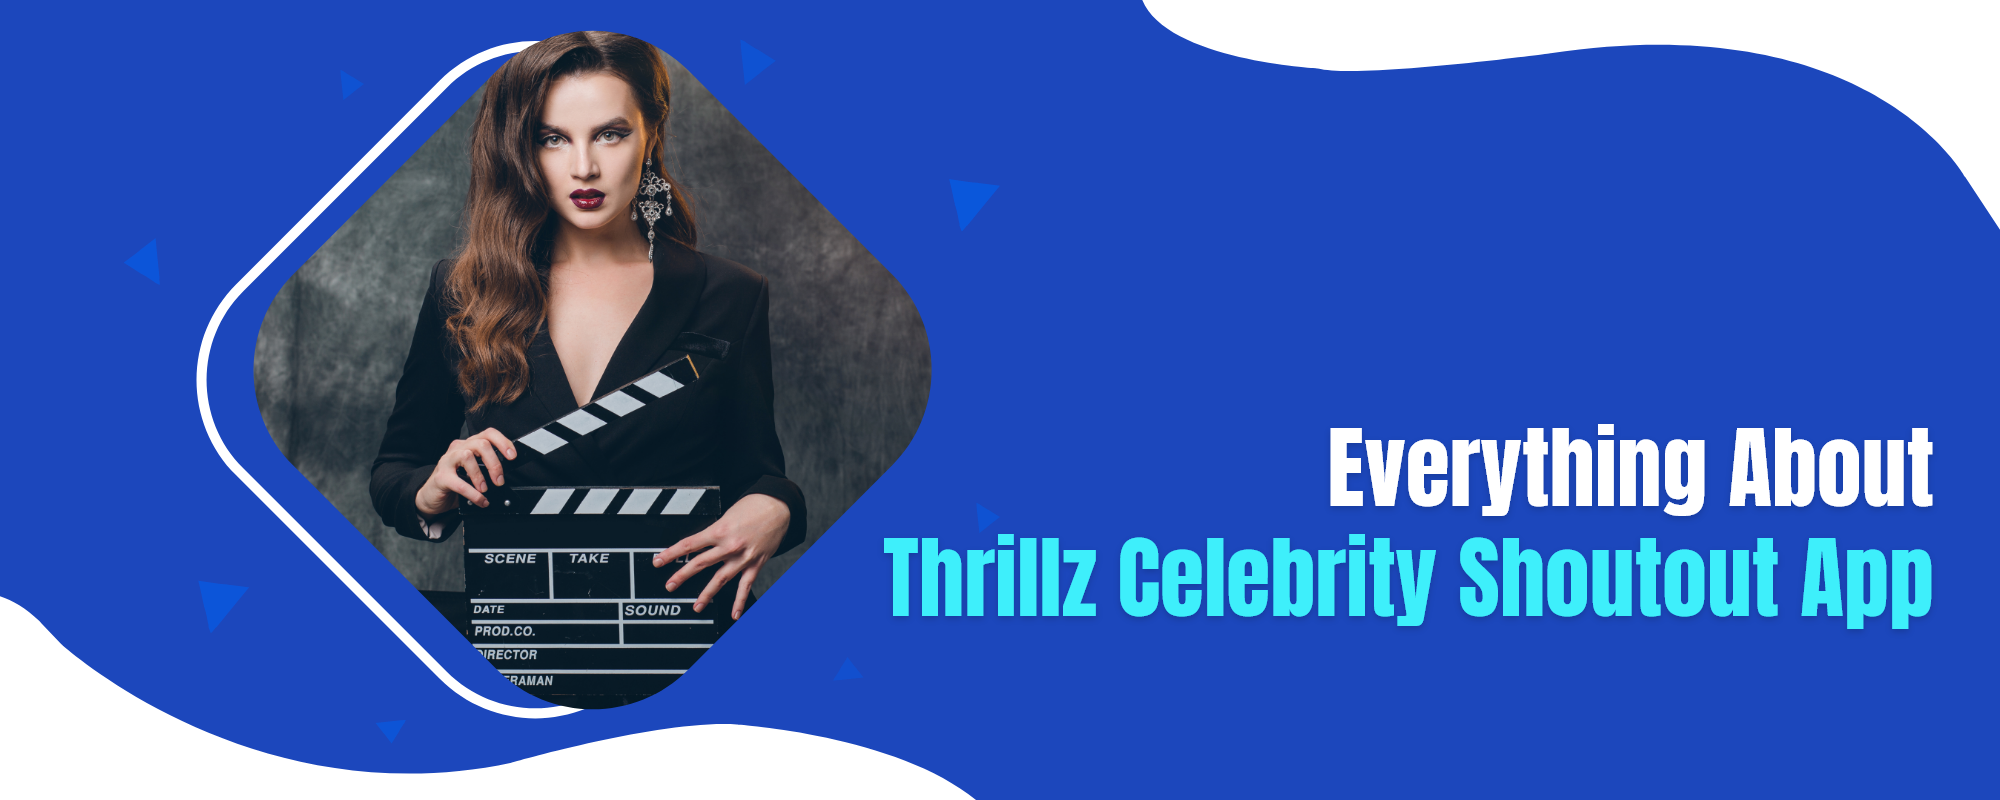 Thrillz Celebrity Shoutout App